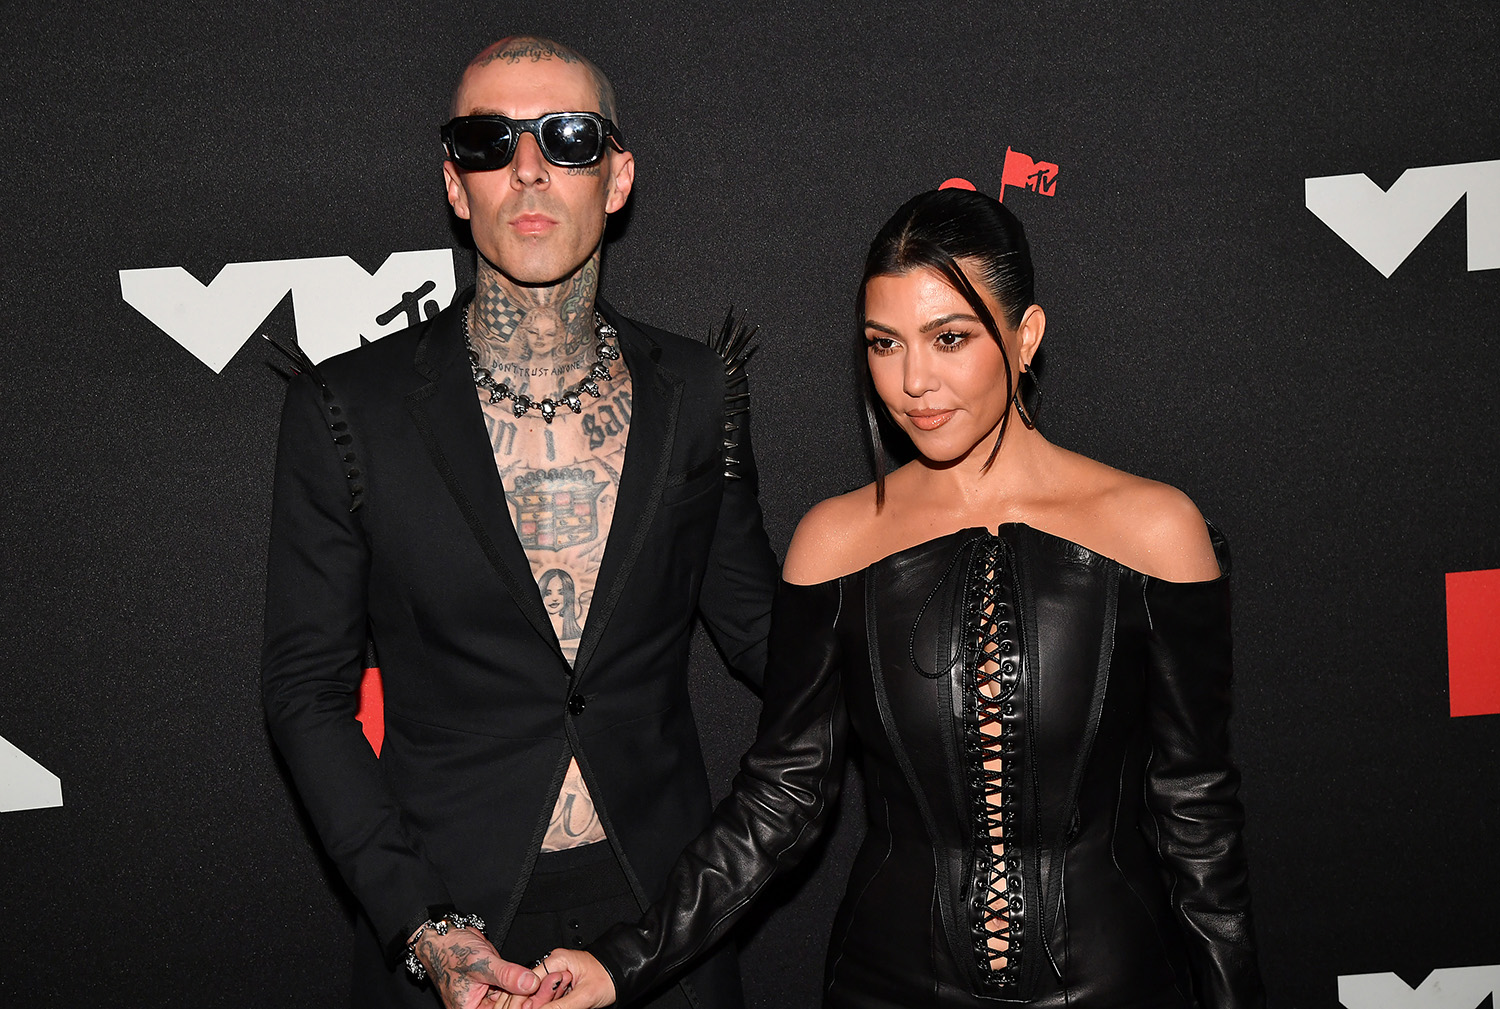 Travis Barker and Kourtney Kardashian attend the 2021 MTV Video Music Awards.